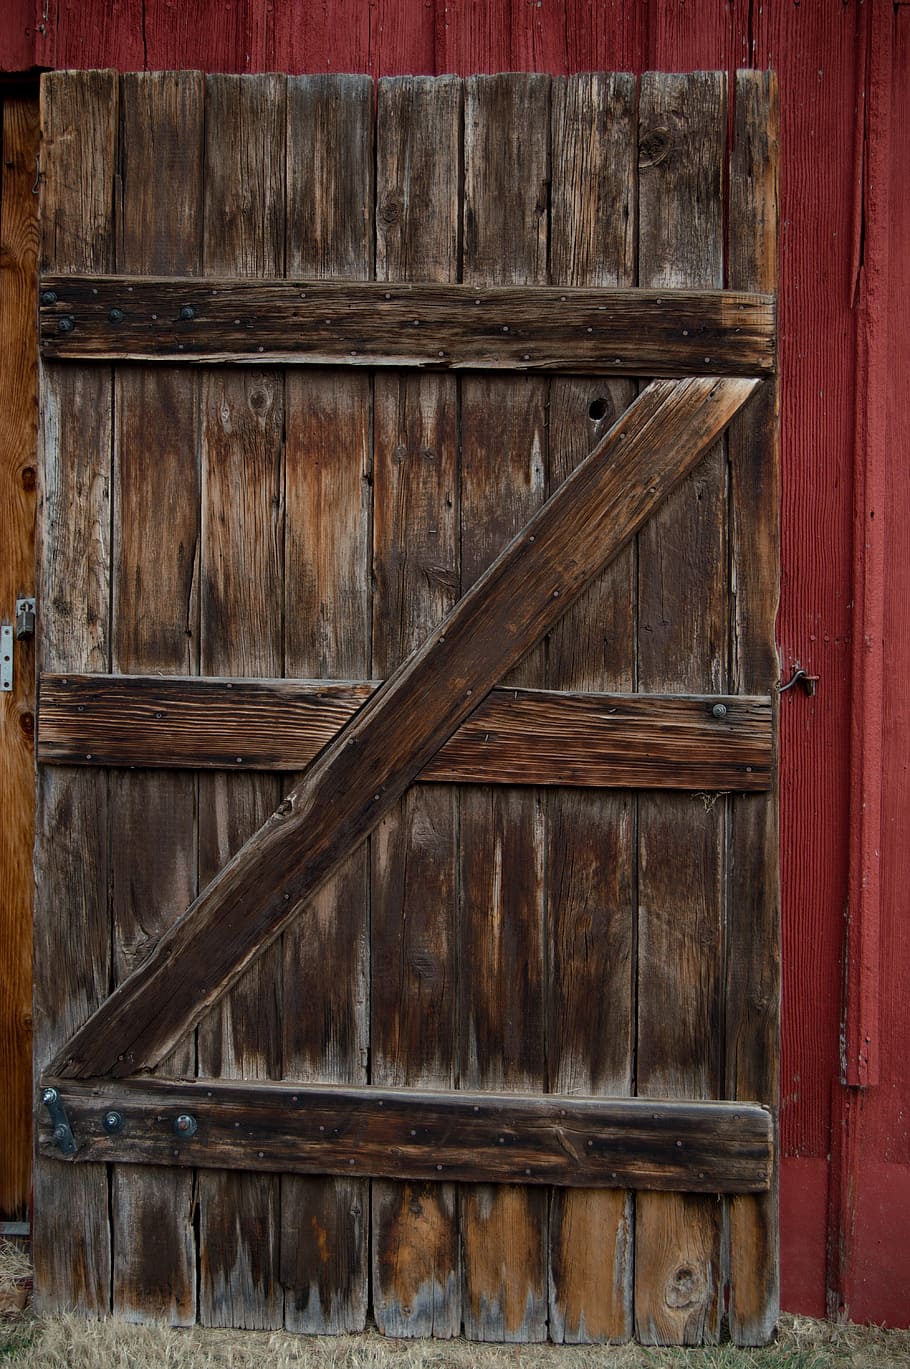 Rustic, Barn Door, Wood, wooden, rural, farm, vintage, old